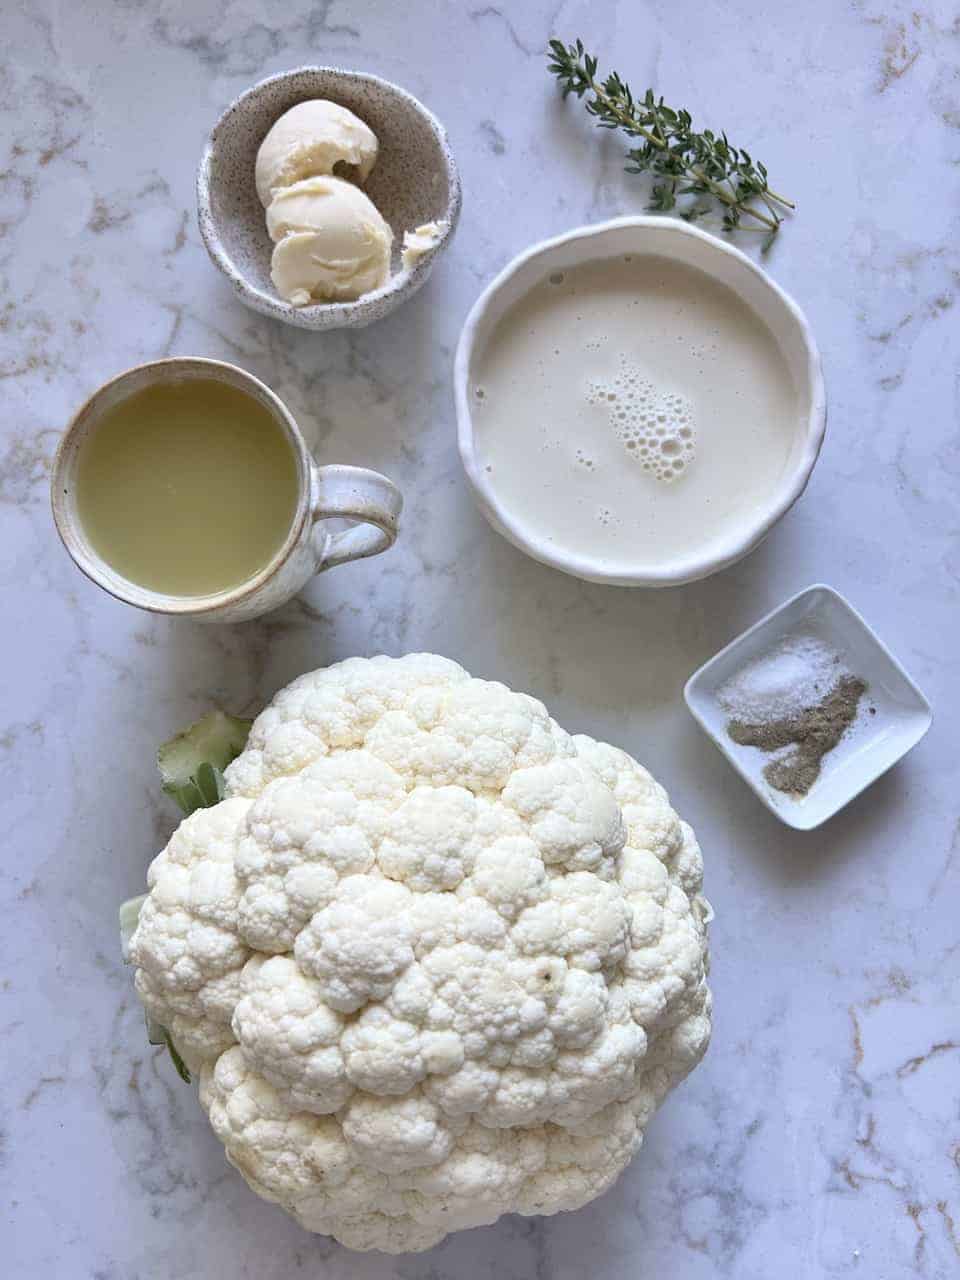 mashed cauliflower ingredients against white background